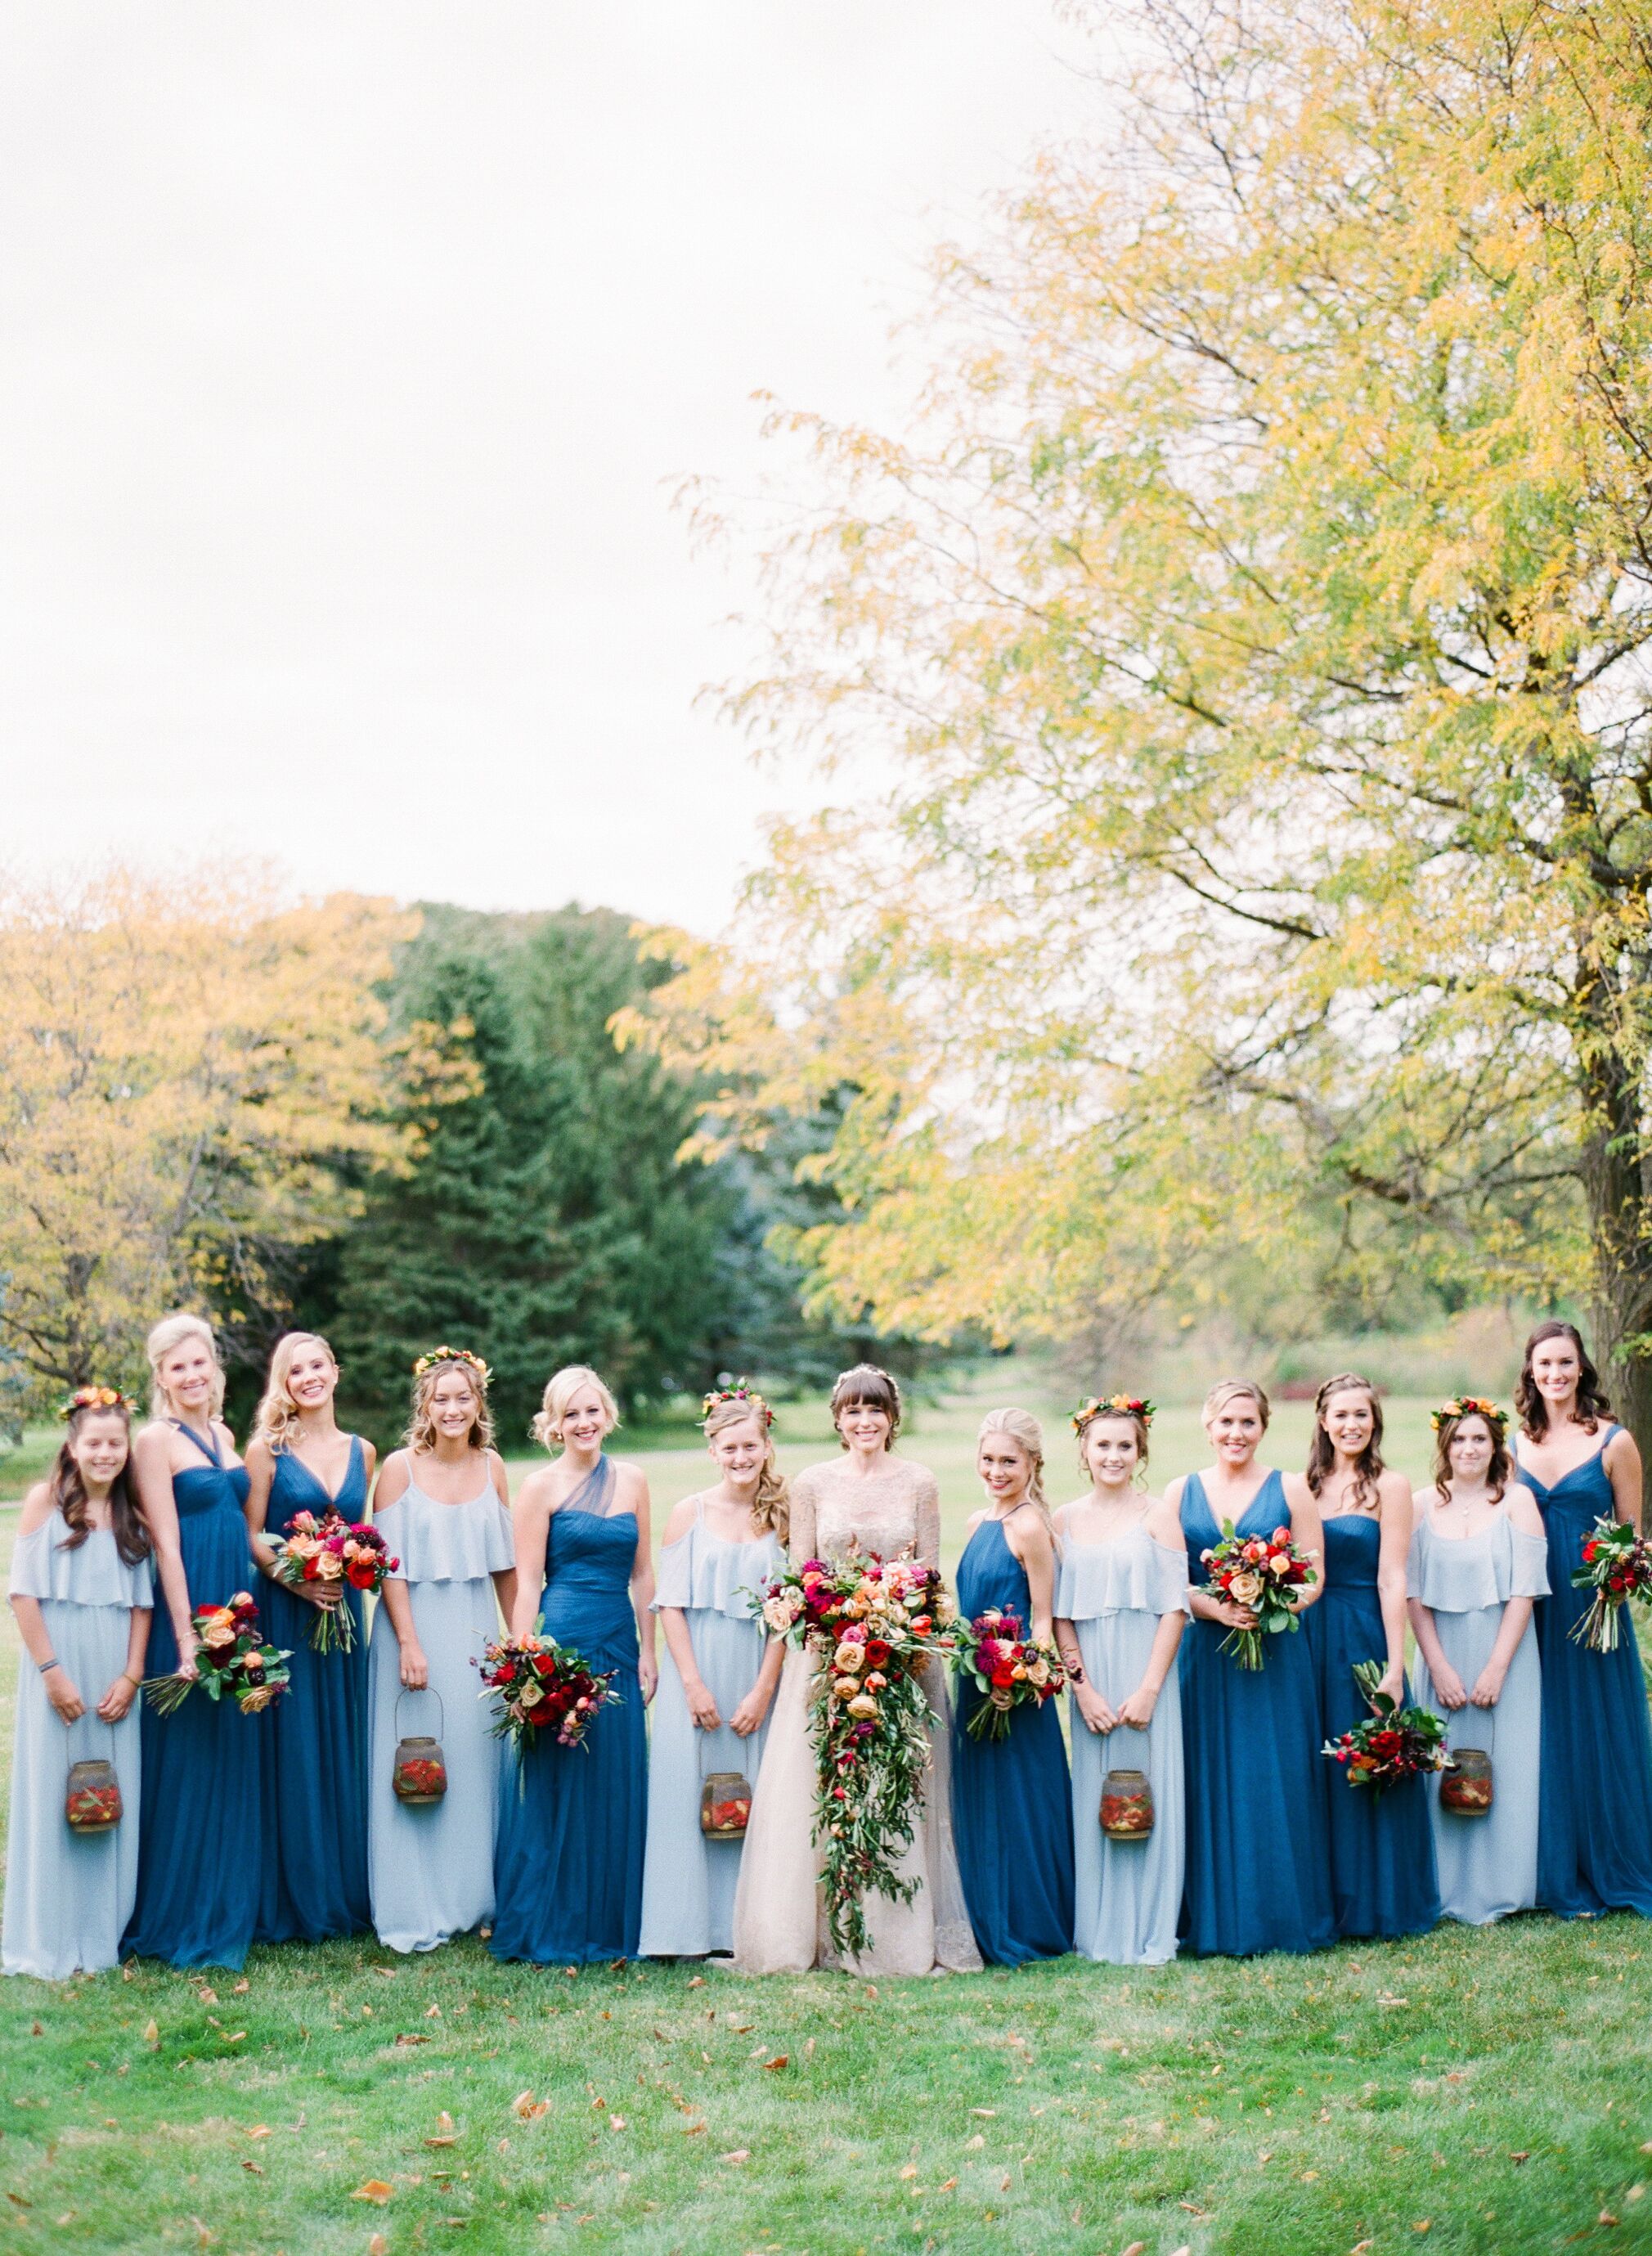 Shades Of Blue Bridesmaid Dresses | vlr.eng.br